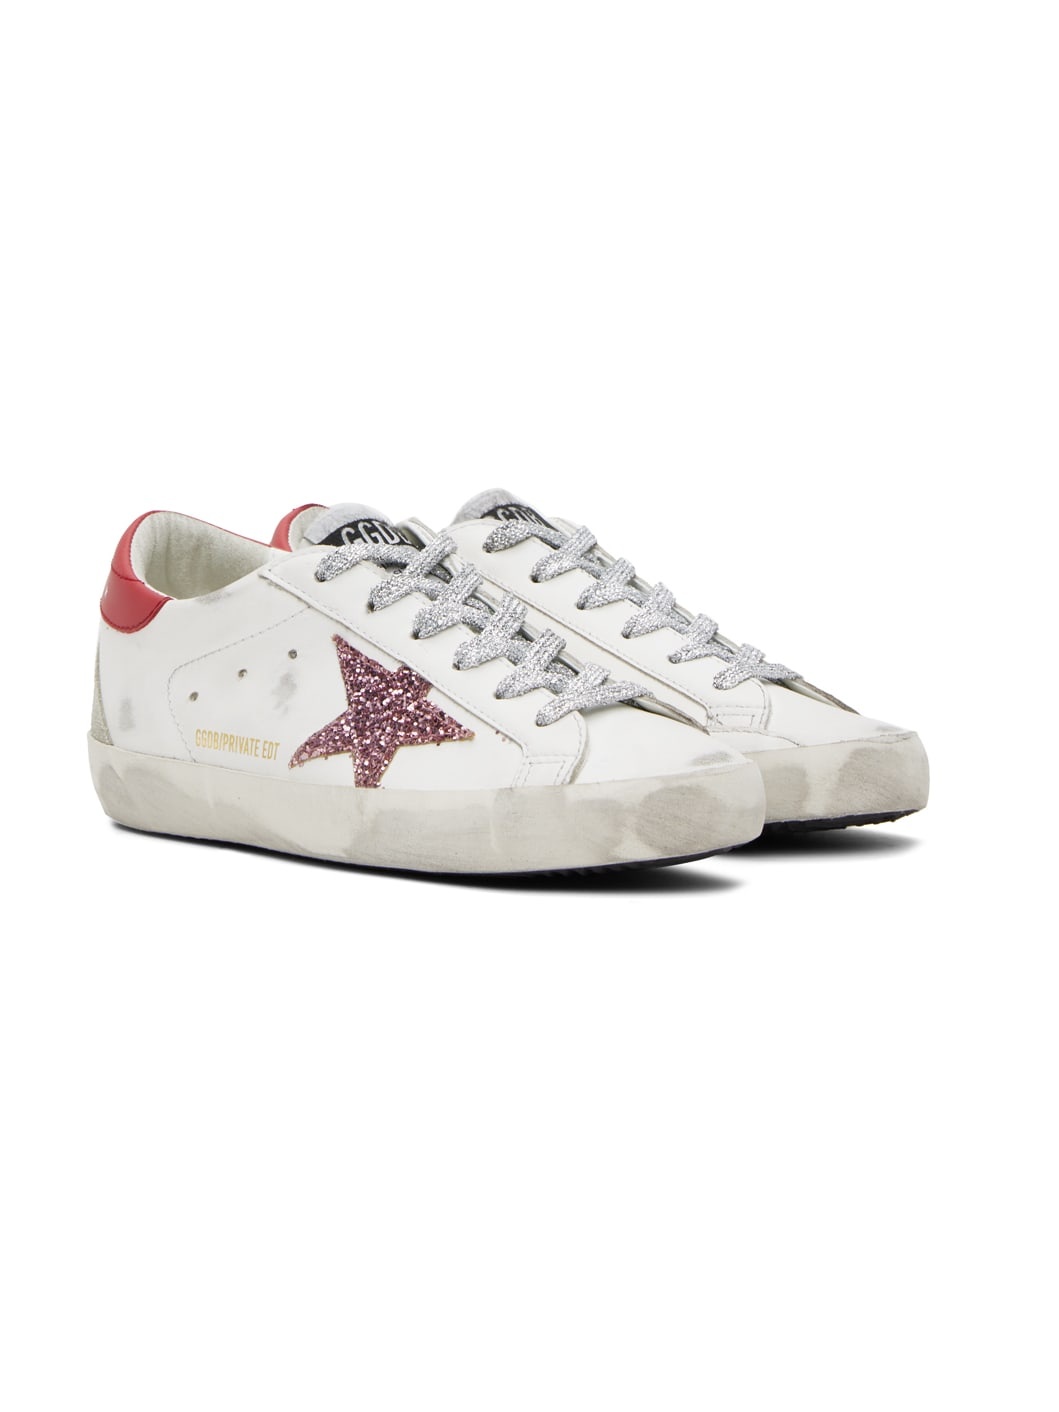 SSENSE Exclusive White Super-Star Sneakers - 4